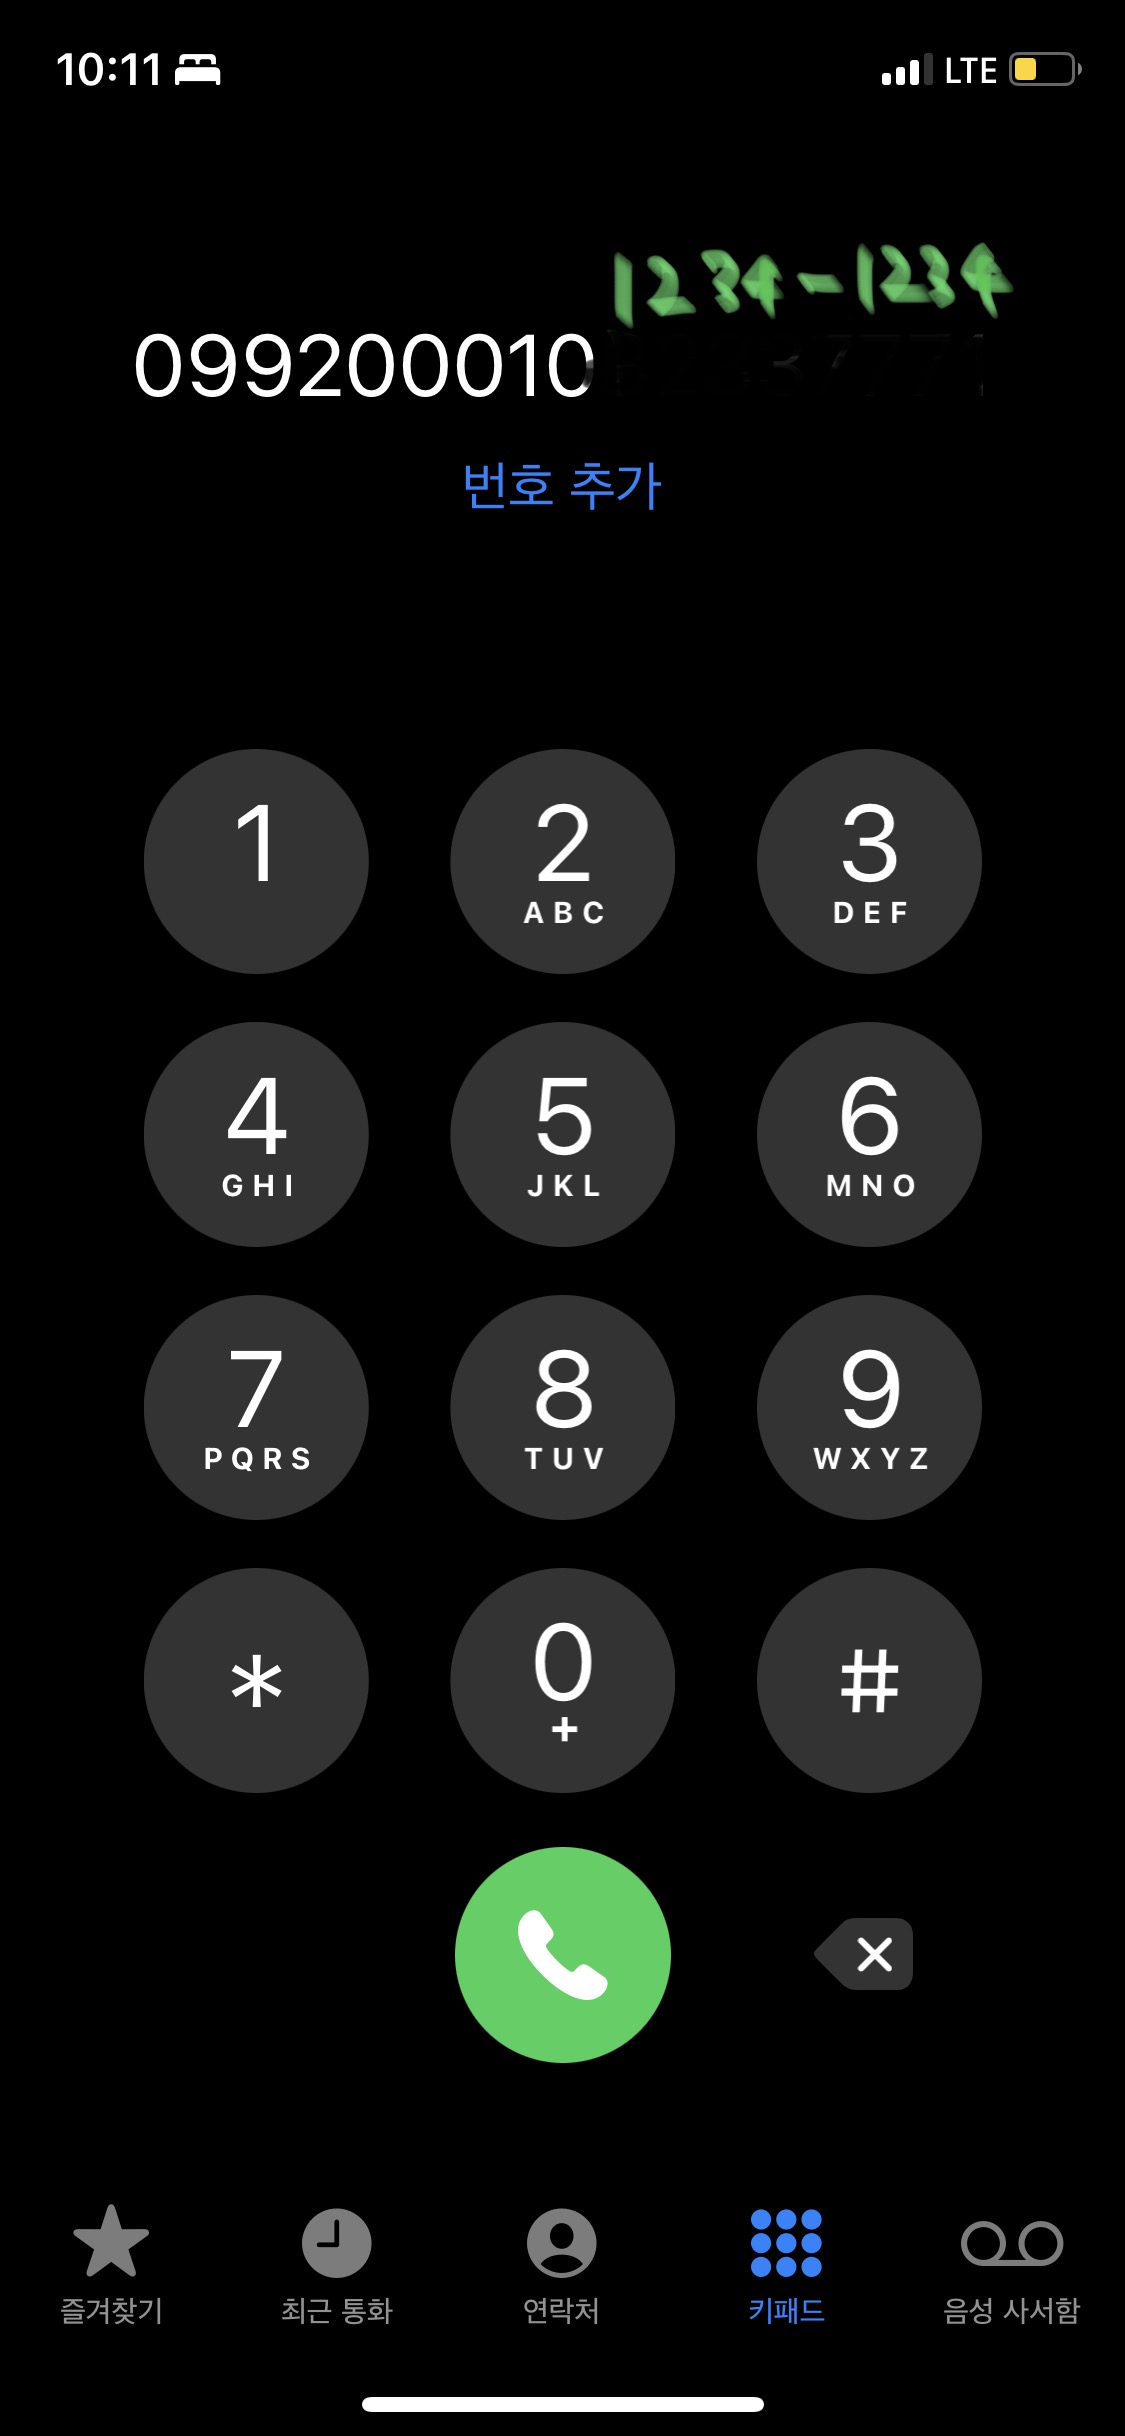 KT 통신사를 이용하시는 분들 중 본인의 컬러링을 듣고 싶다면 099200010에 본인 휴대폰 번호 뒷 8자리를 입력 후 통화 버튼을 누릅니다.